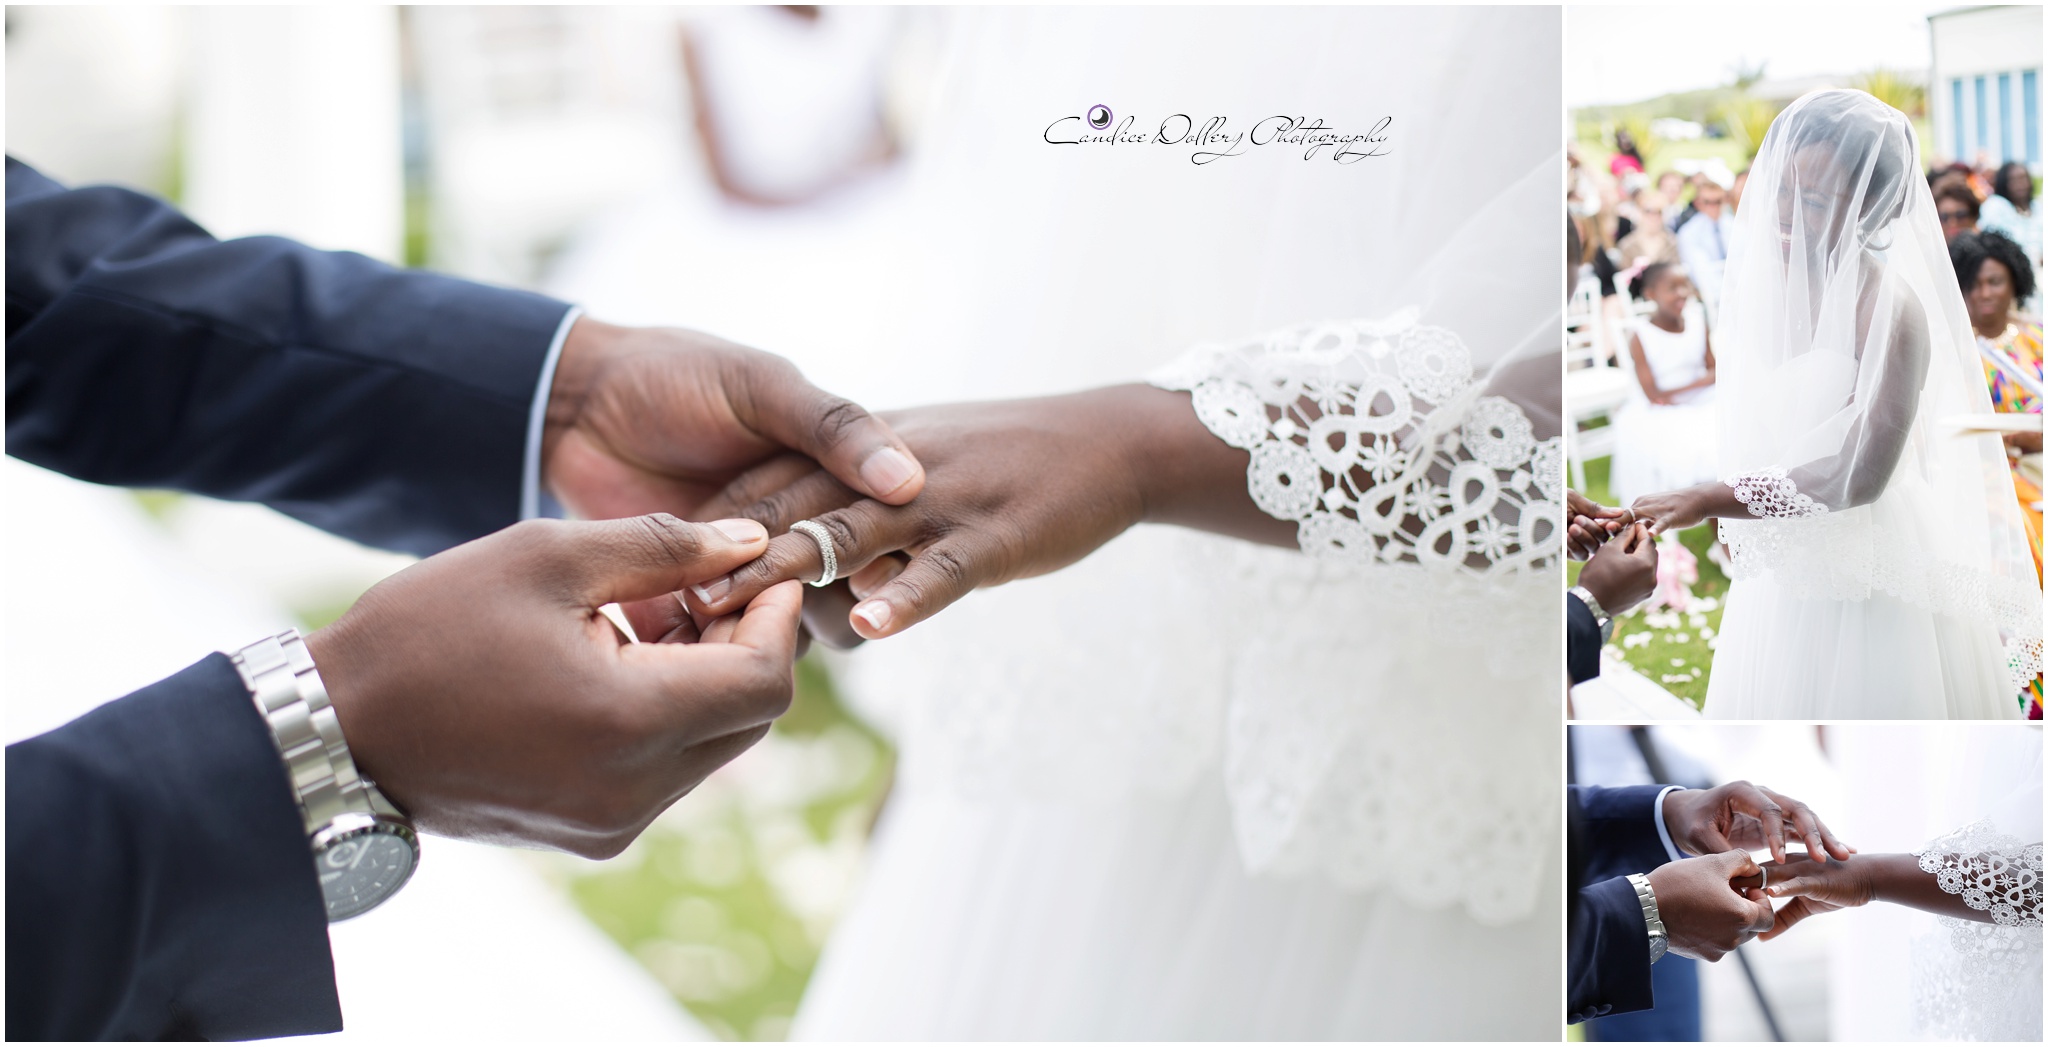 Reuben & Antoinette's Wedding - Candice Dollery Photography_7879